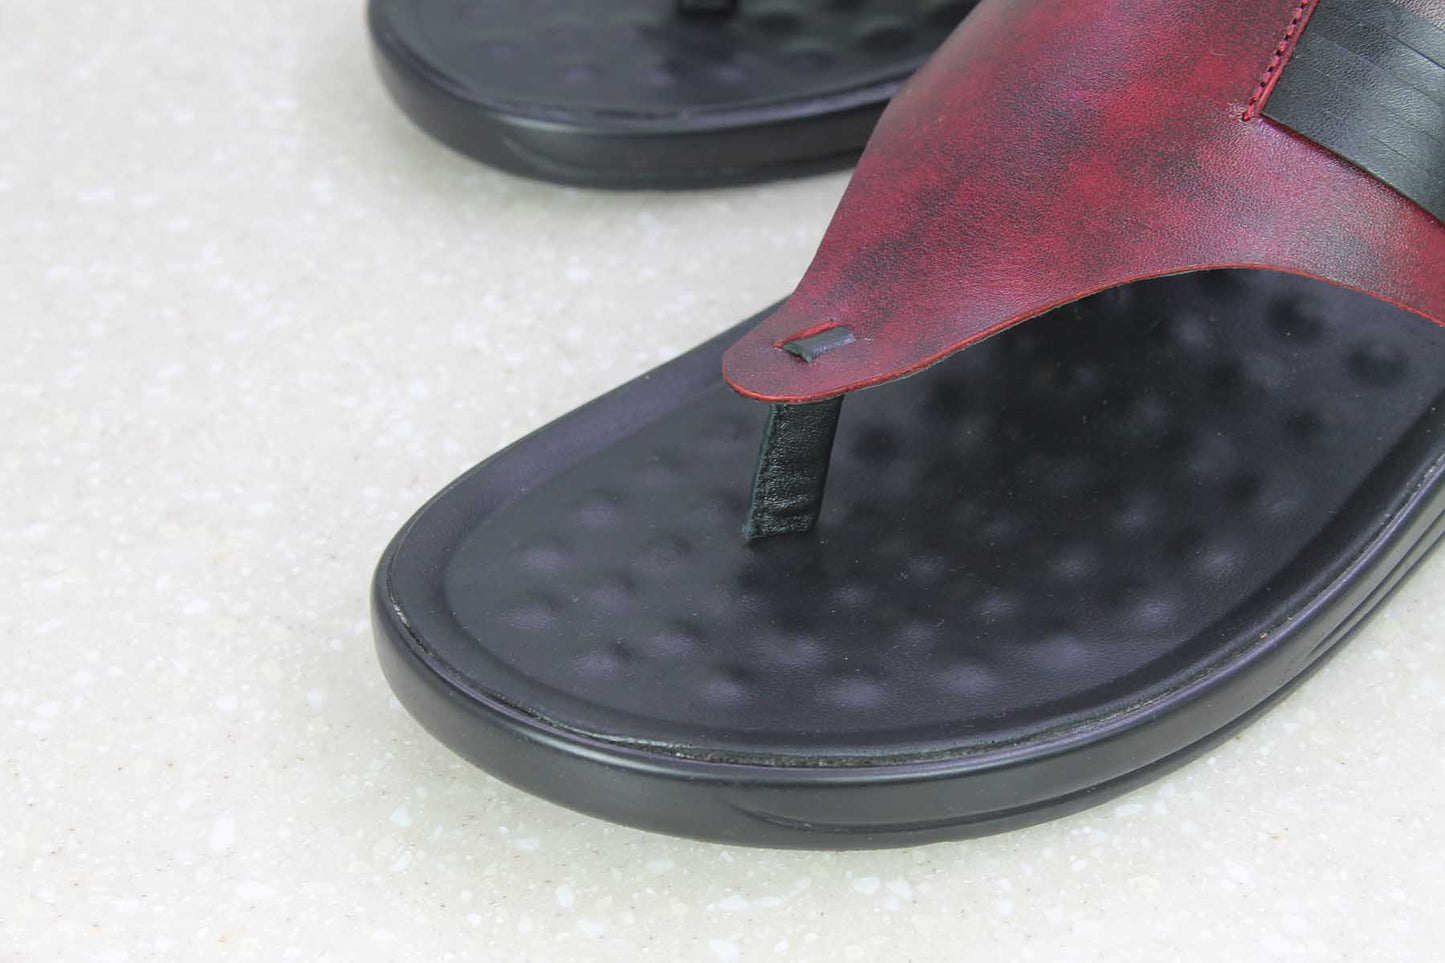 MEN'S MARRON CASUAL SLIPPER-Men's Slippers-Inc5 Shoes